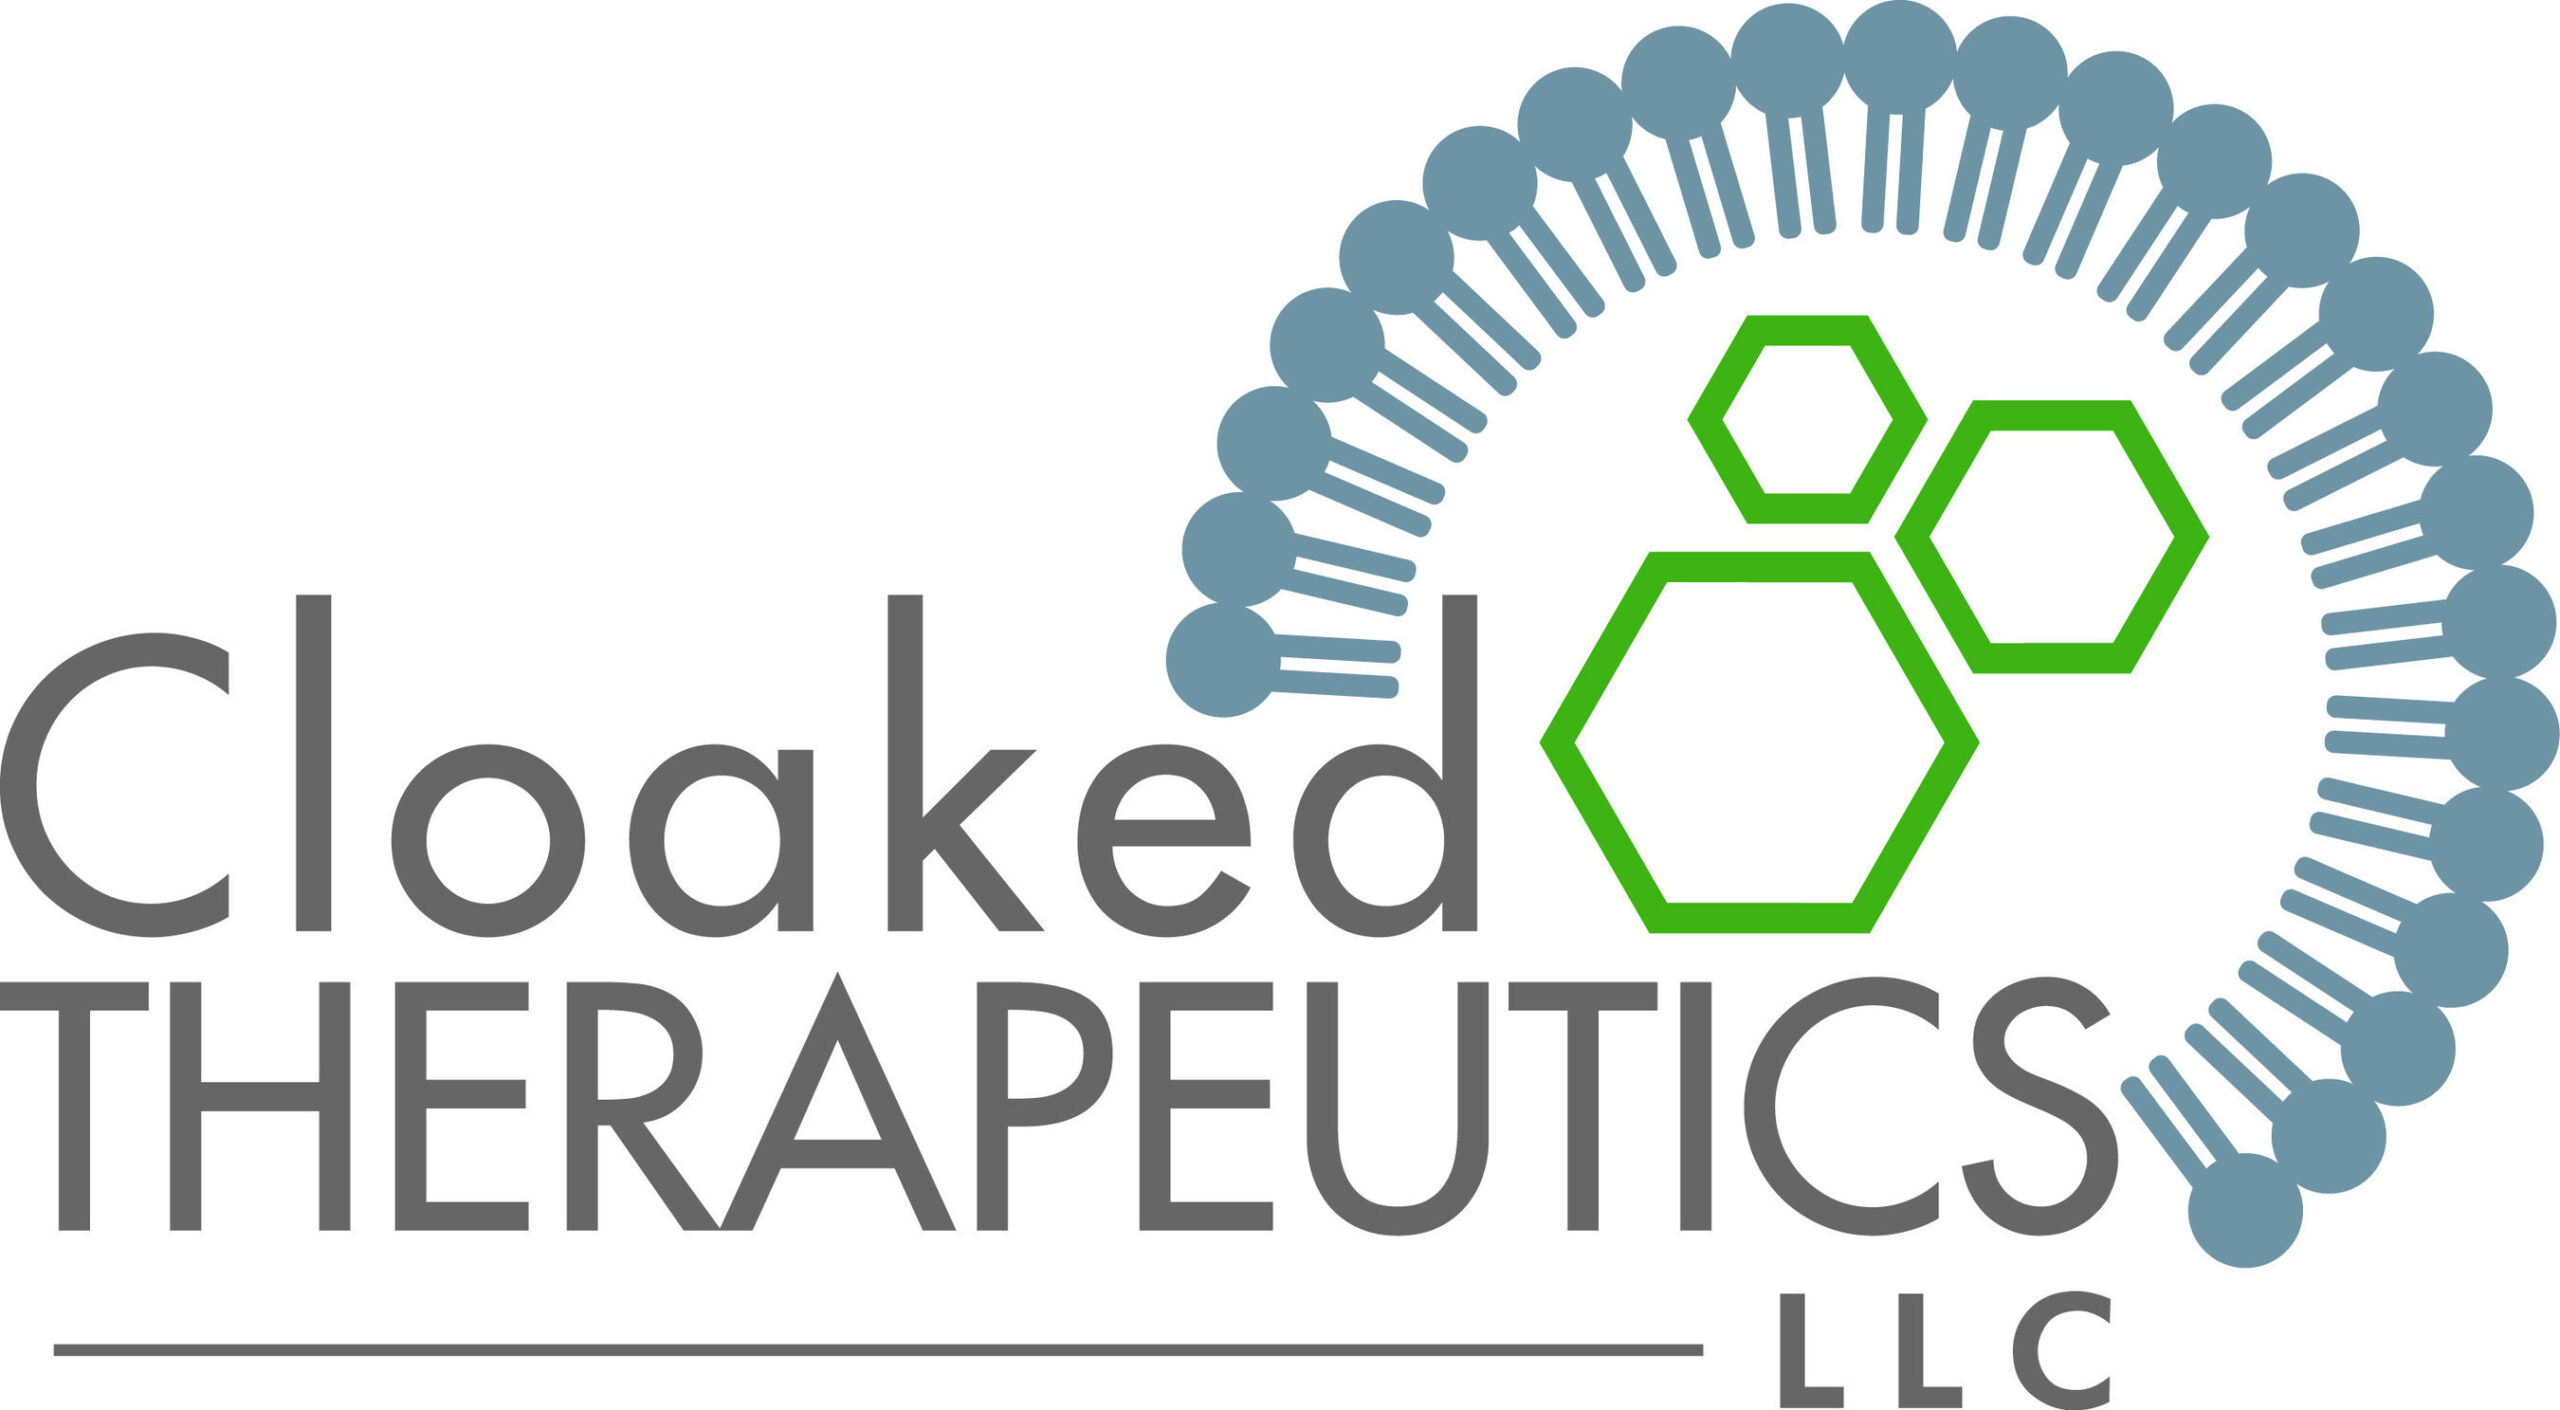 Cloaked Therapeutics, LLC